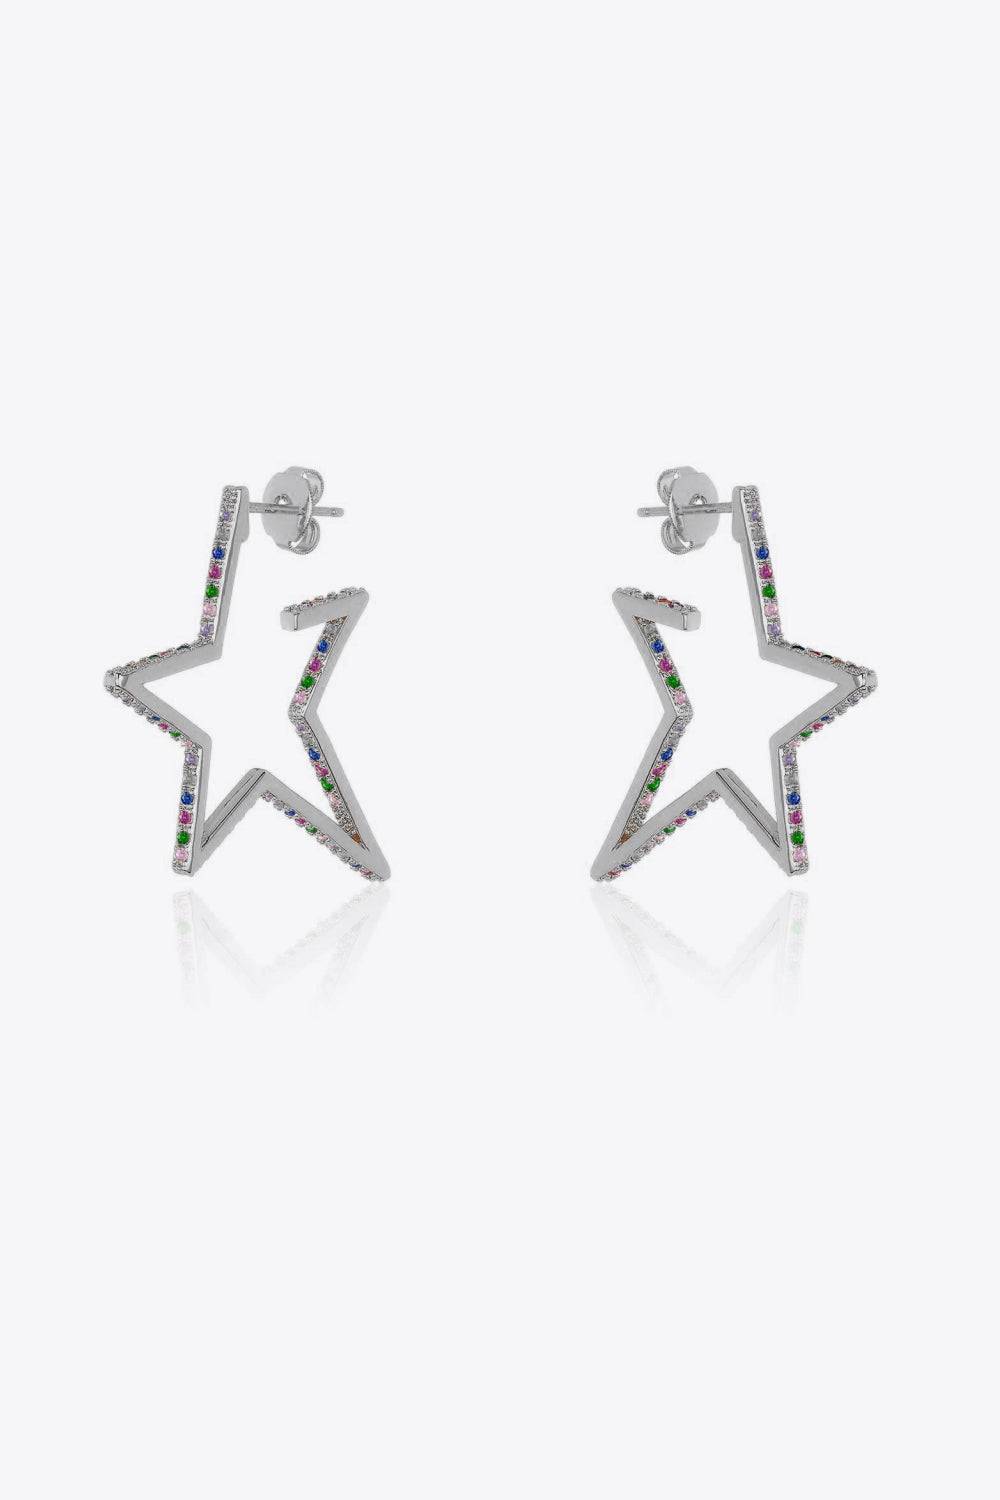 Zircon Star 925 Sterling Silver Earrings - Guy Christopher 